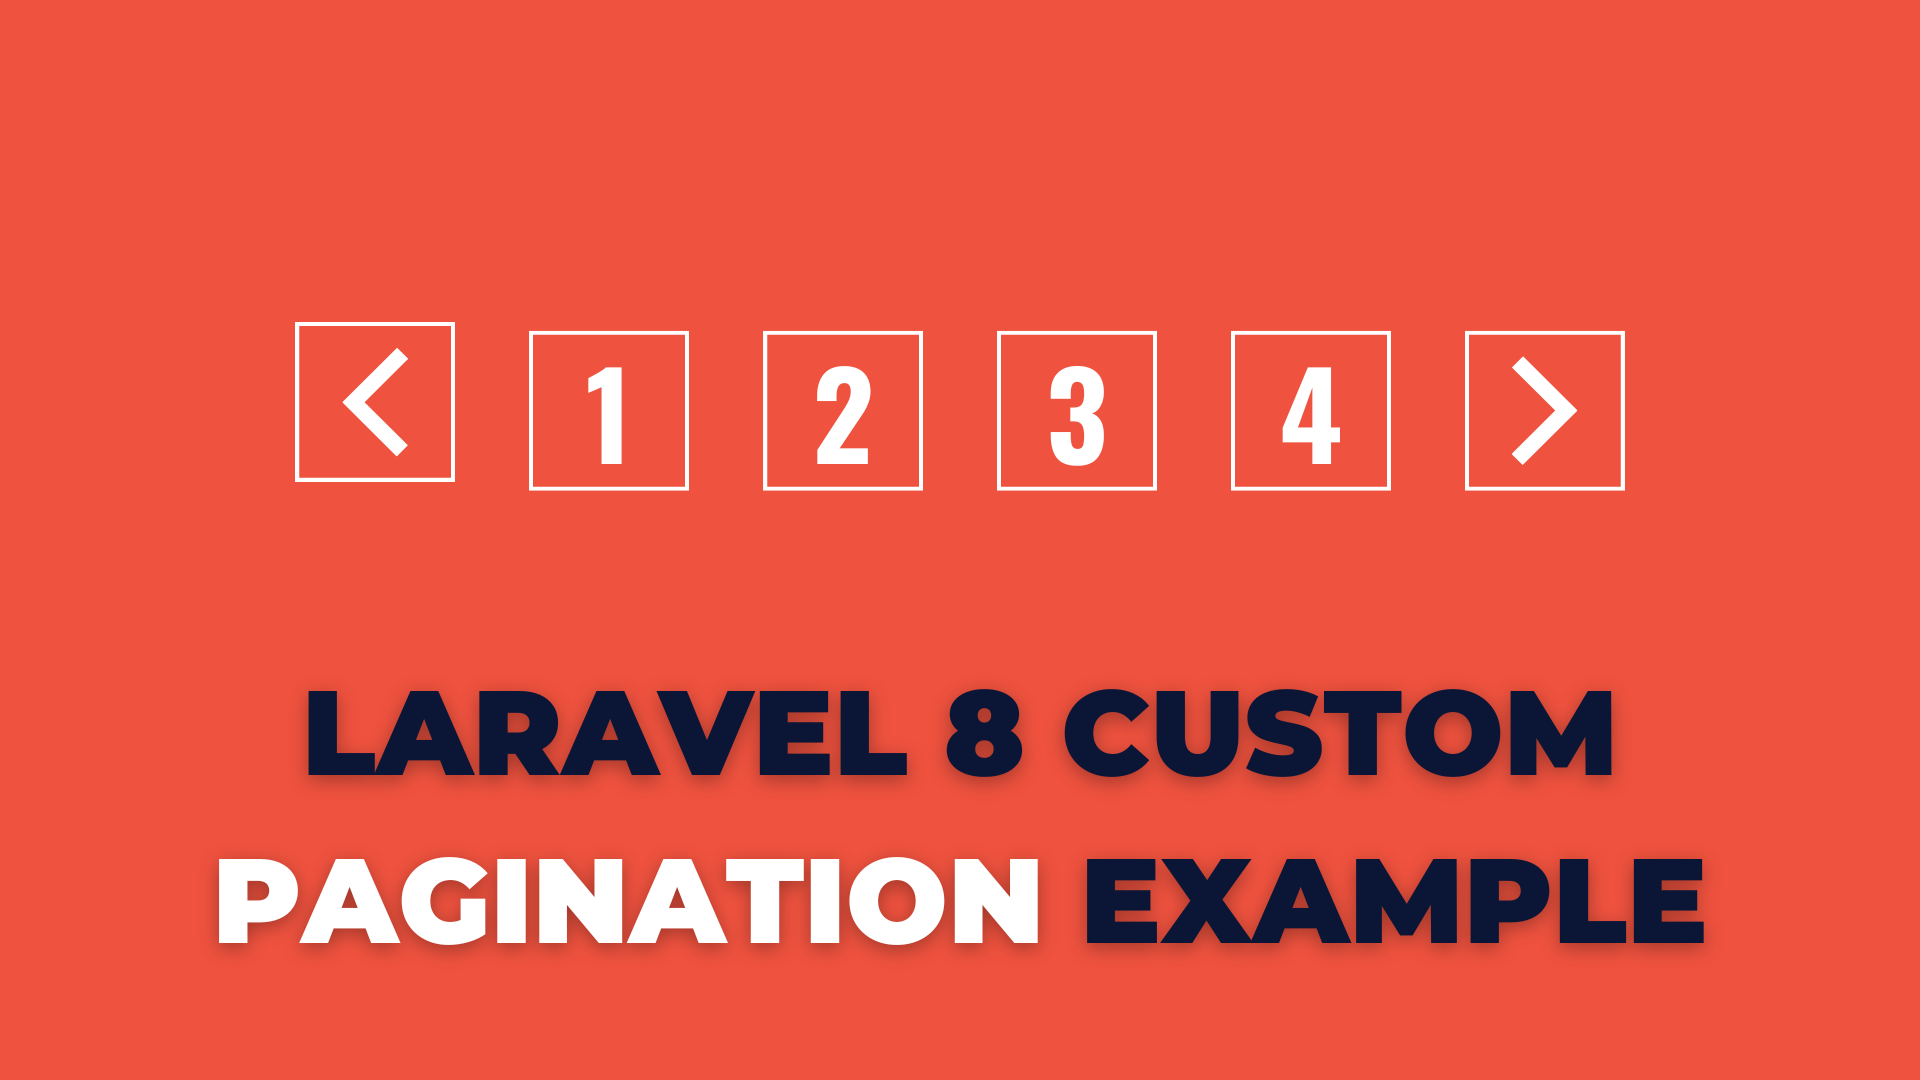 Laravel 8 custom pagination example